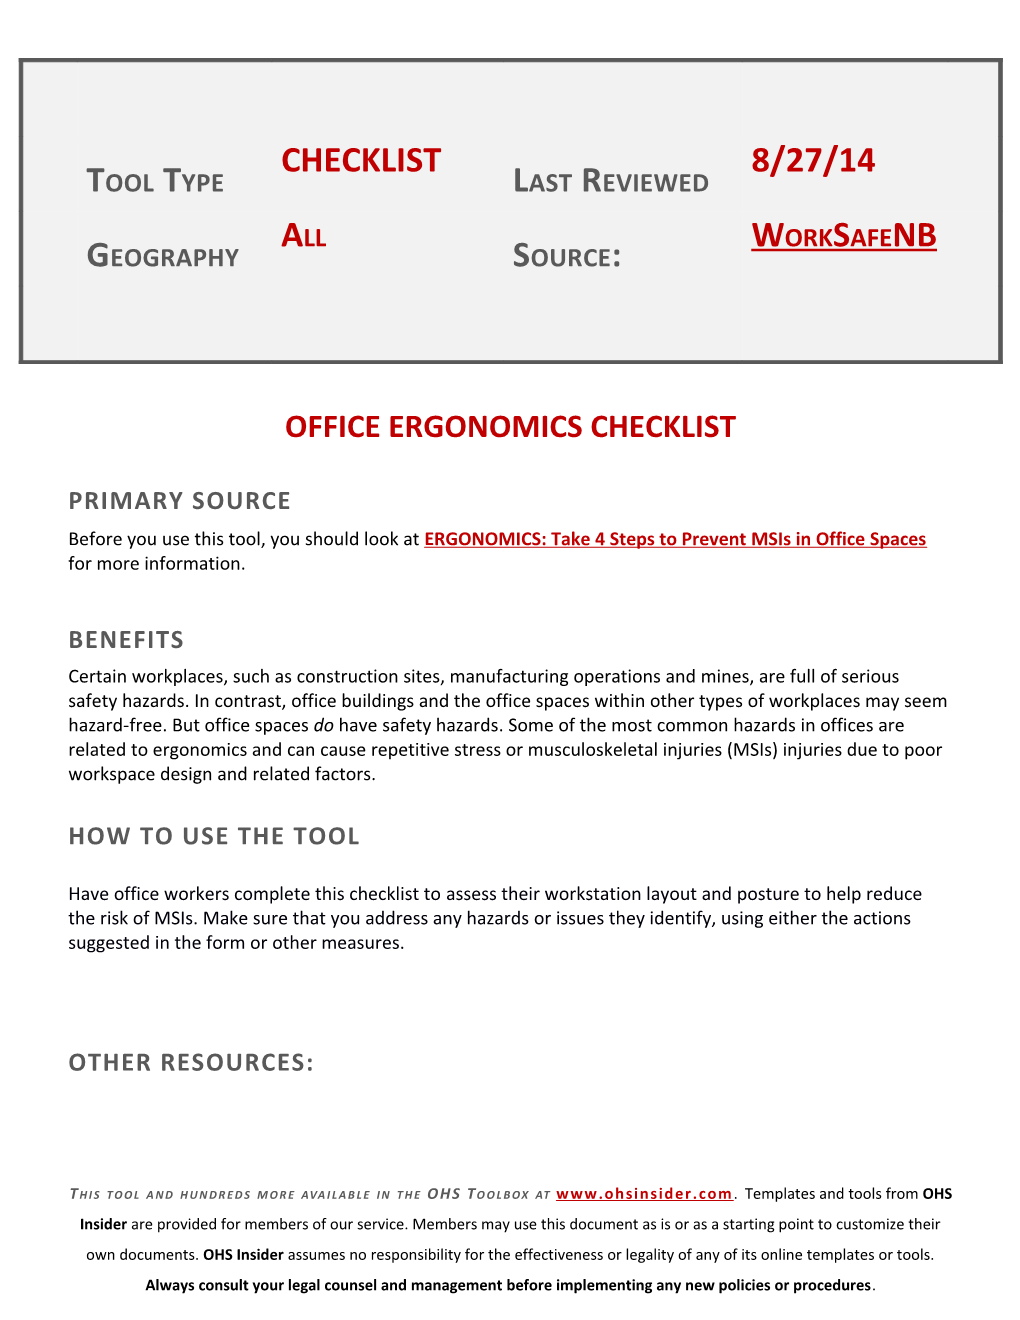 Office Ergonomics Checklist